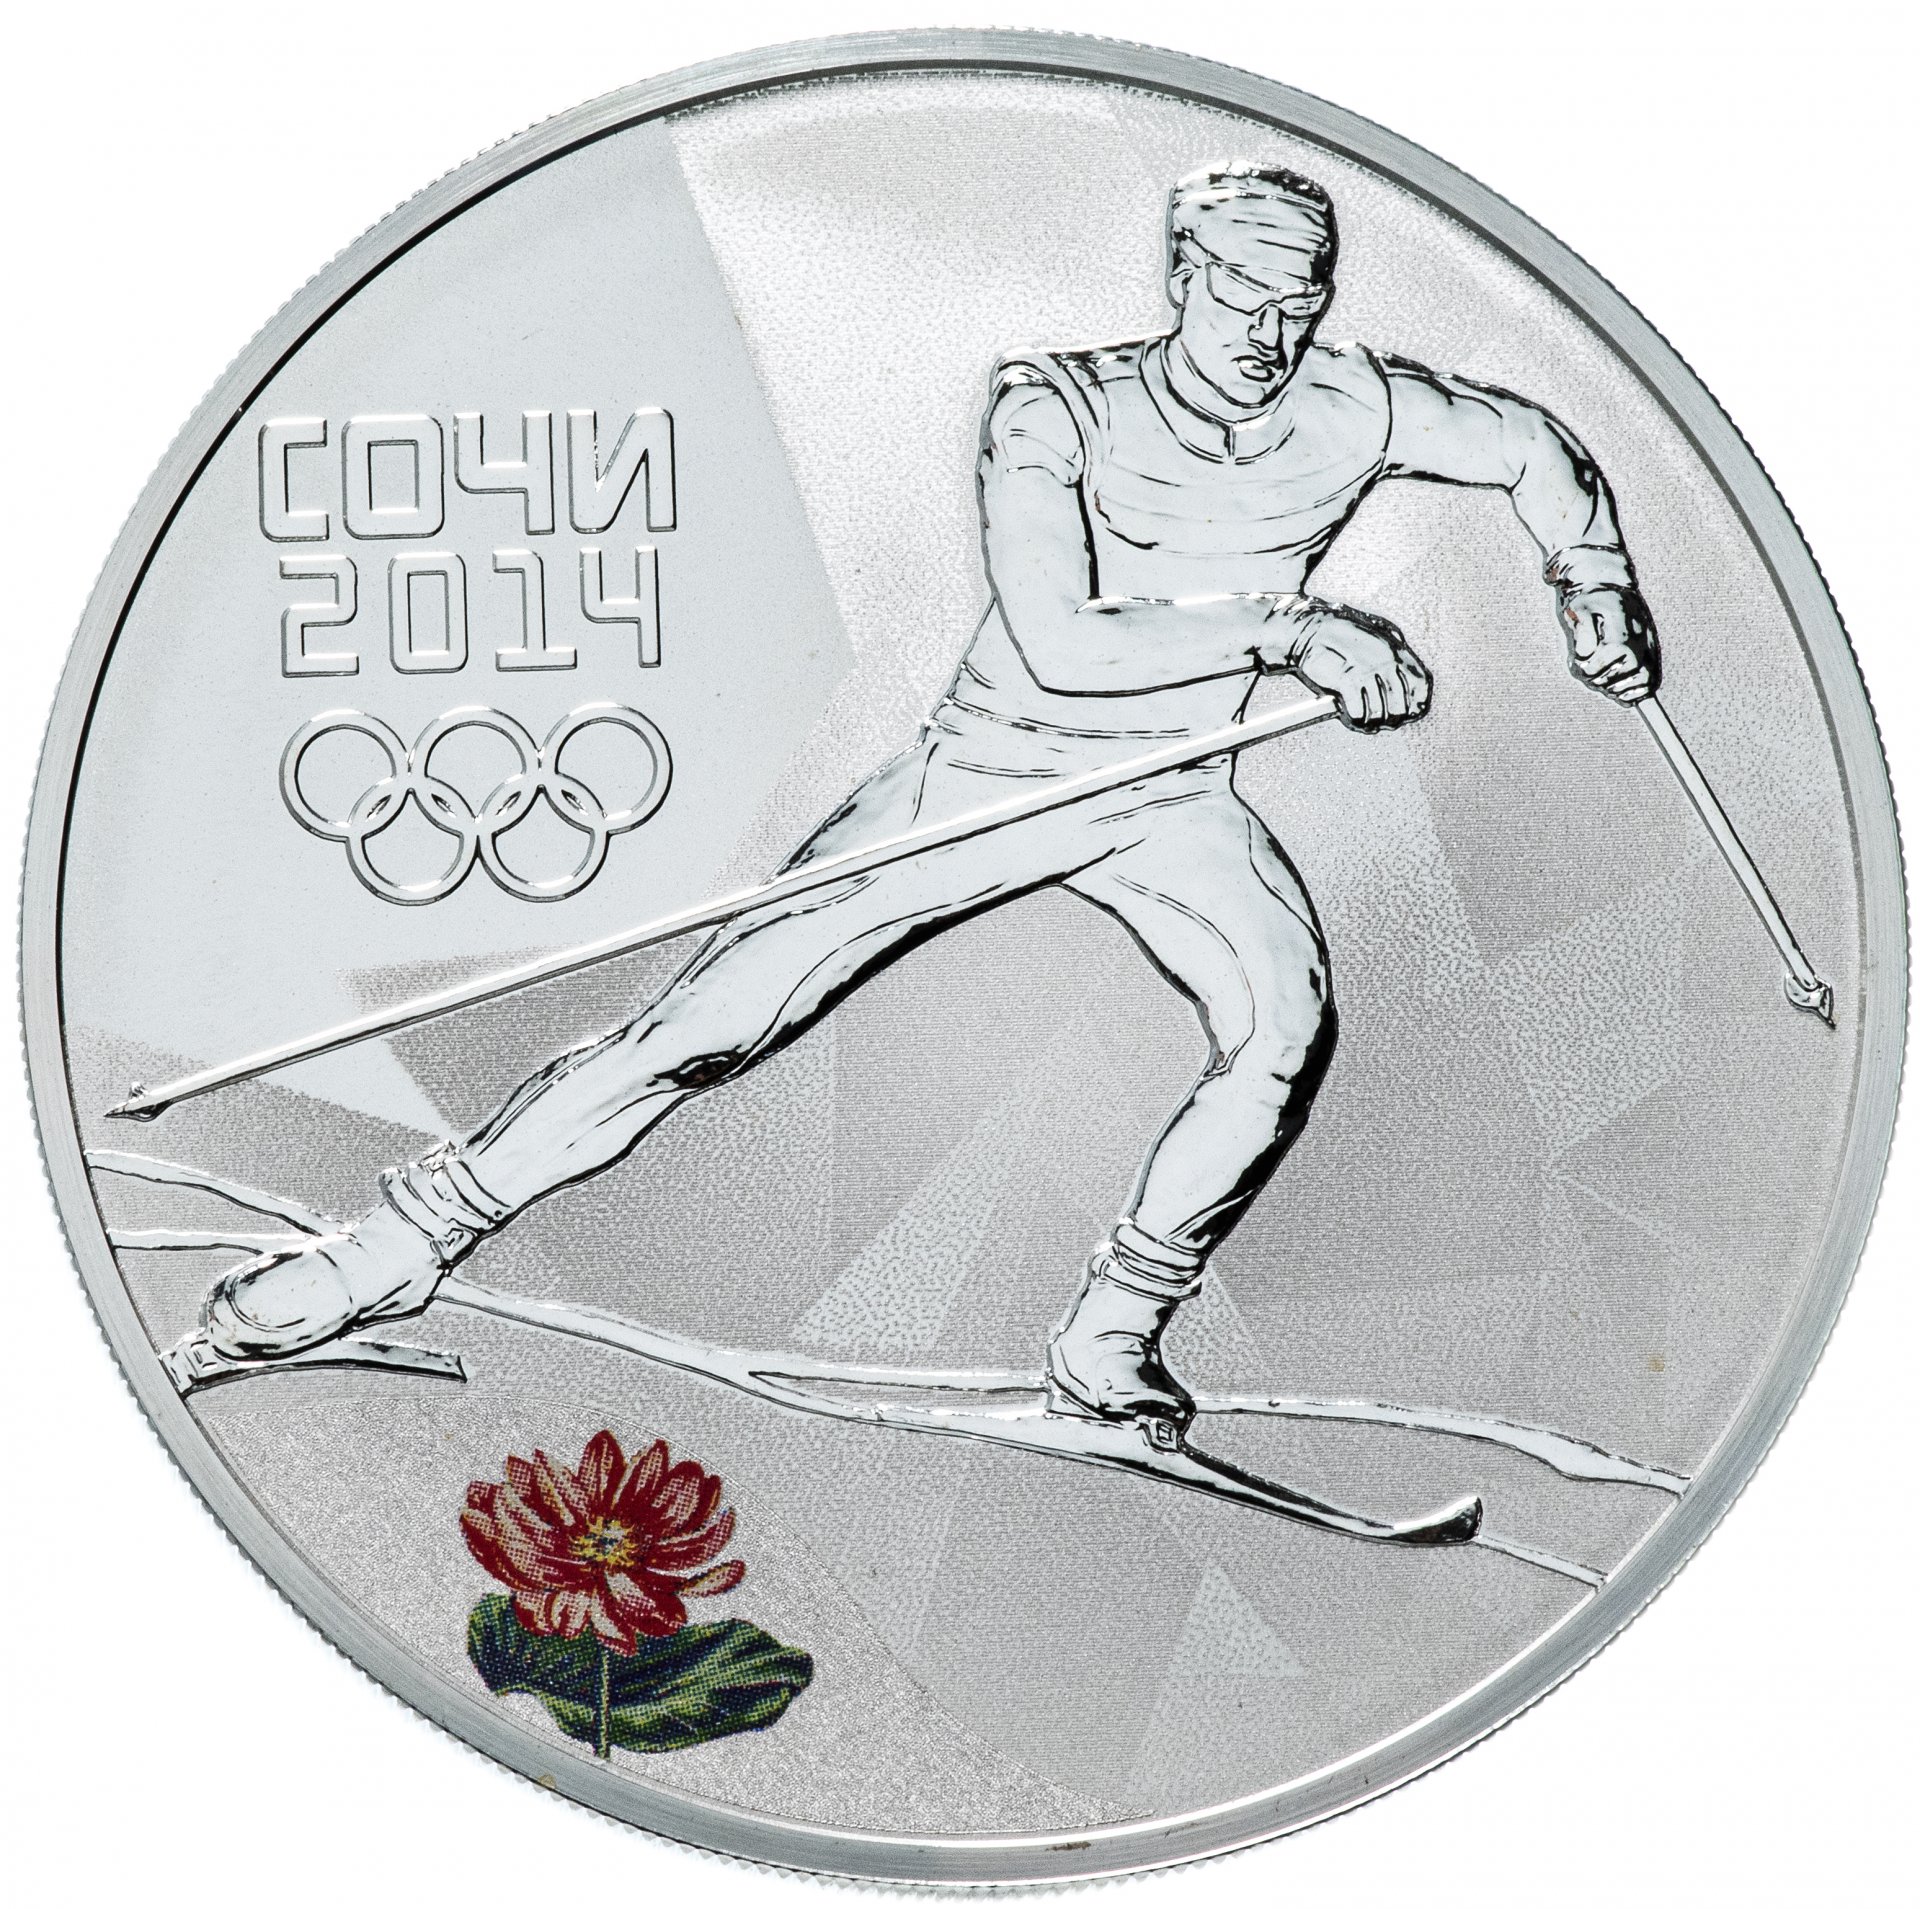 3 рубля 2014 серебро. 3 Рубля серебро лыжные гонки монета Сочи 2014. Монета Сочи 2014 лыжные гонки. Монеты с лыжником. Сочи 2014 лыжник монета.